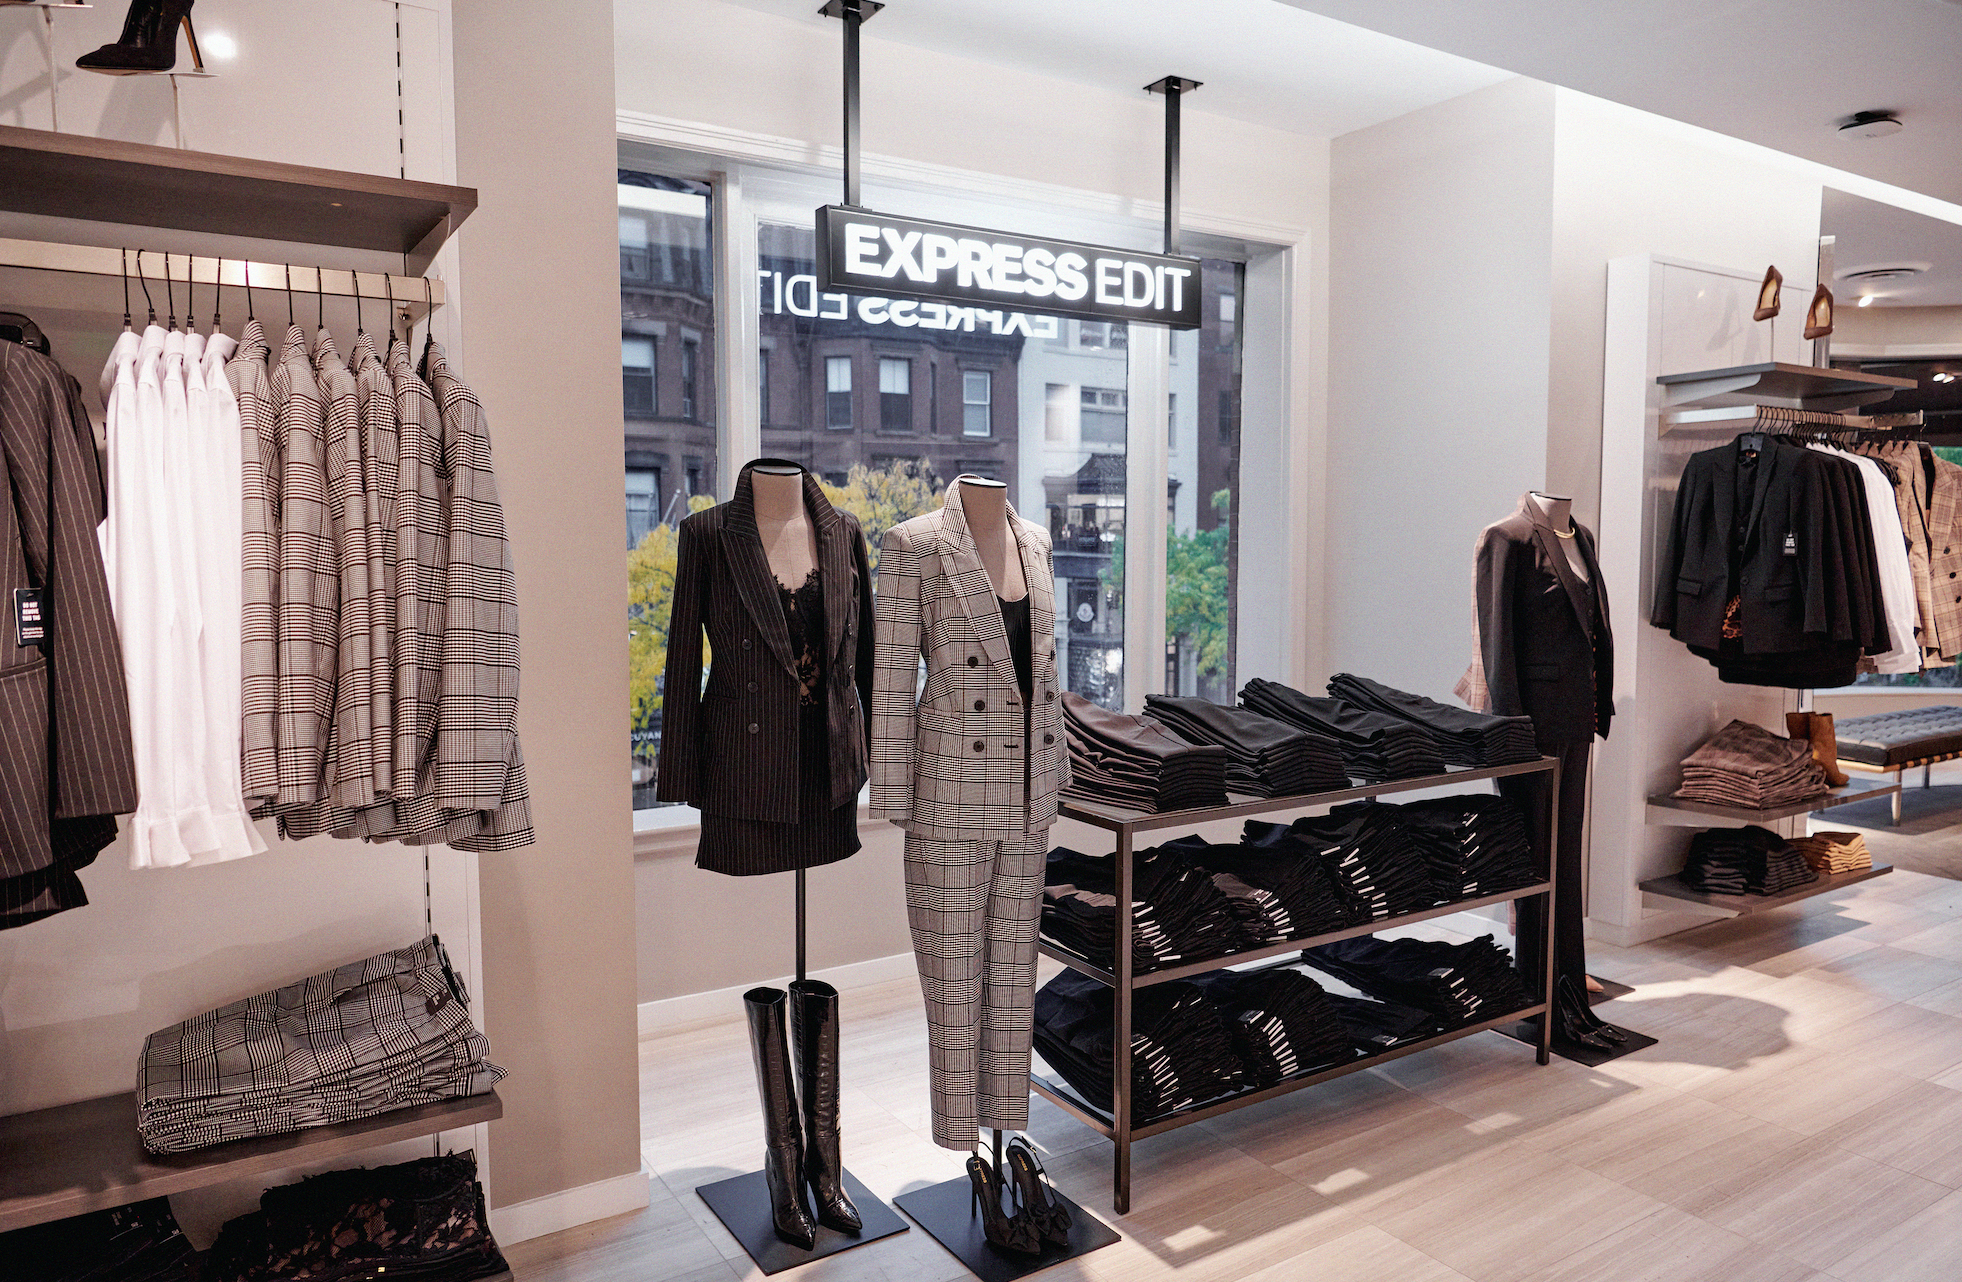 Express Edit has opened on Newbury Street in Boston